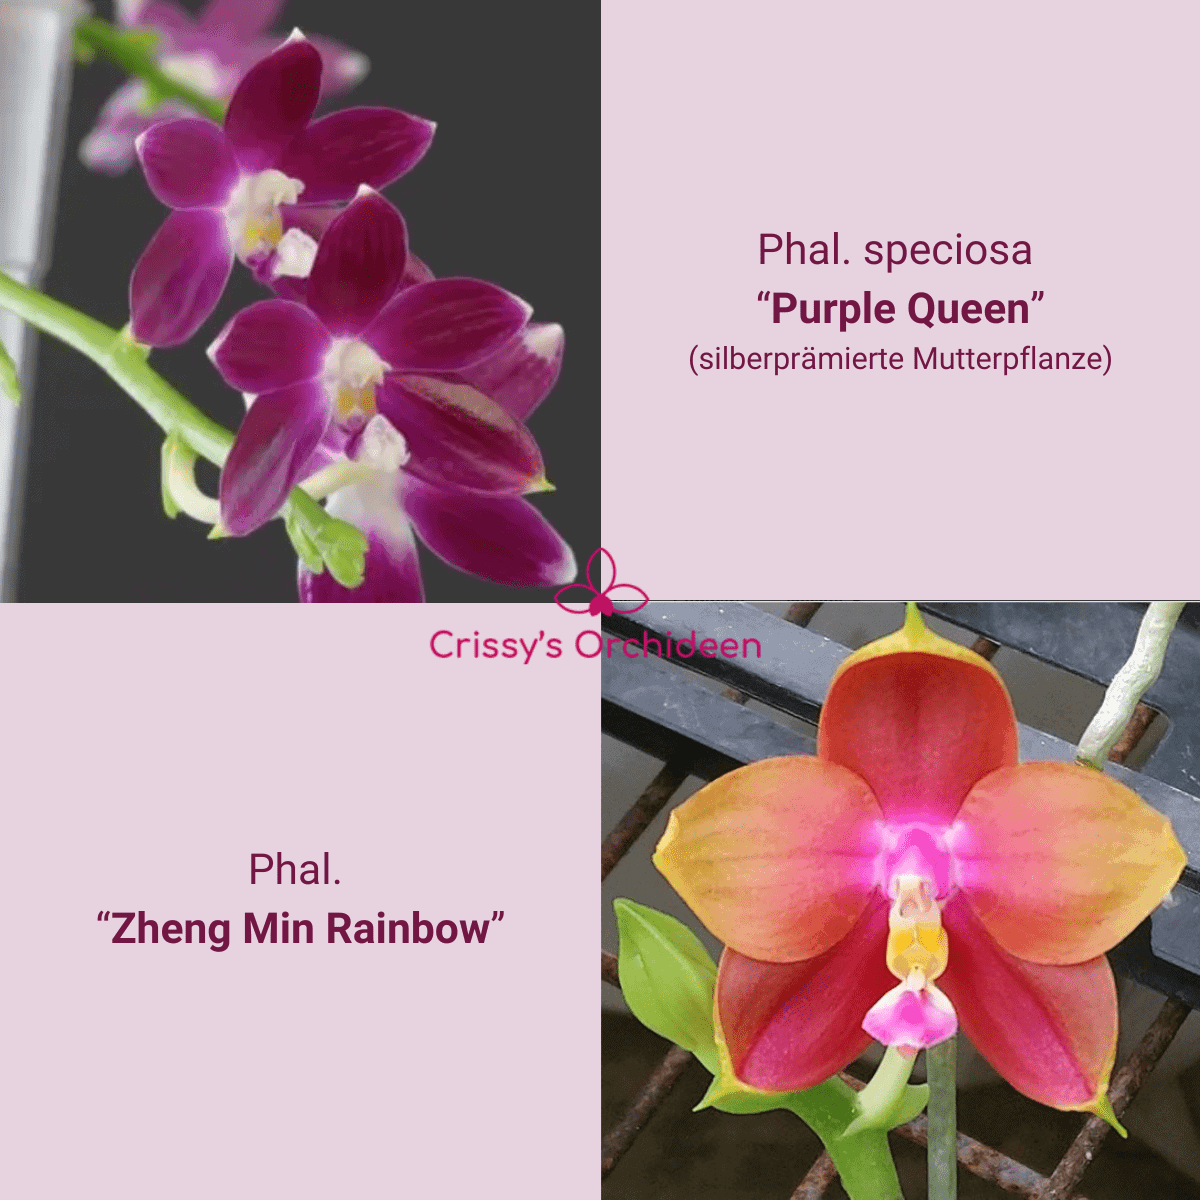 Phalaenopsis speciosa "Purple Queen" x Zheng Min Rainbow